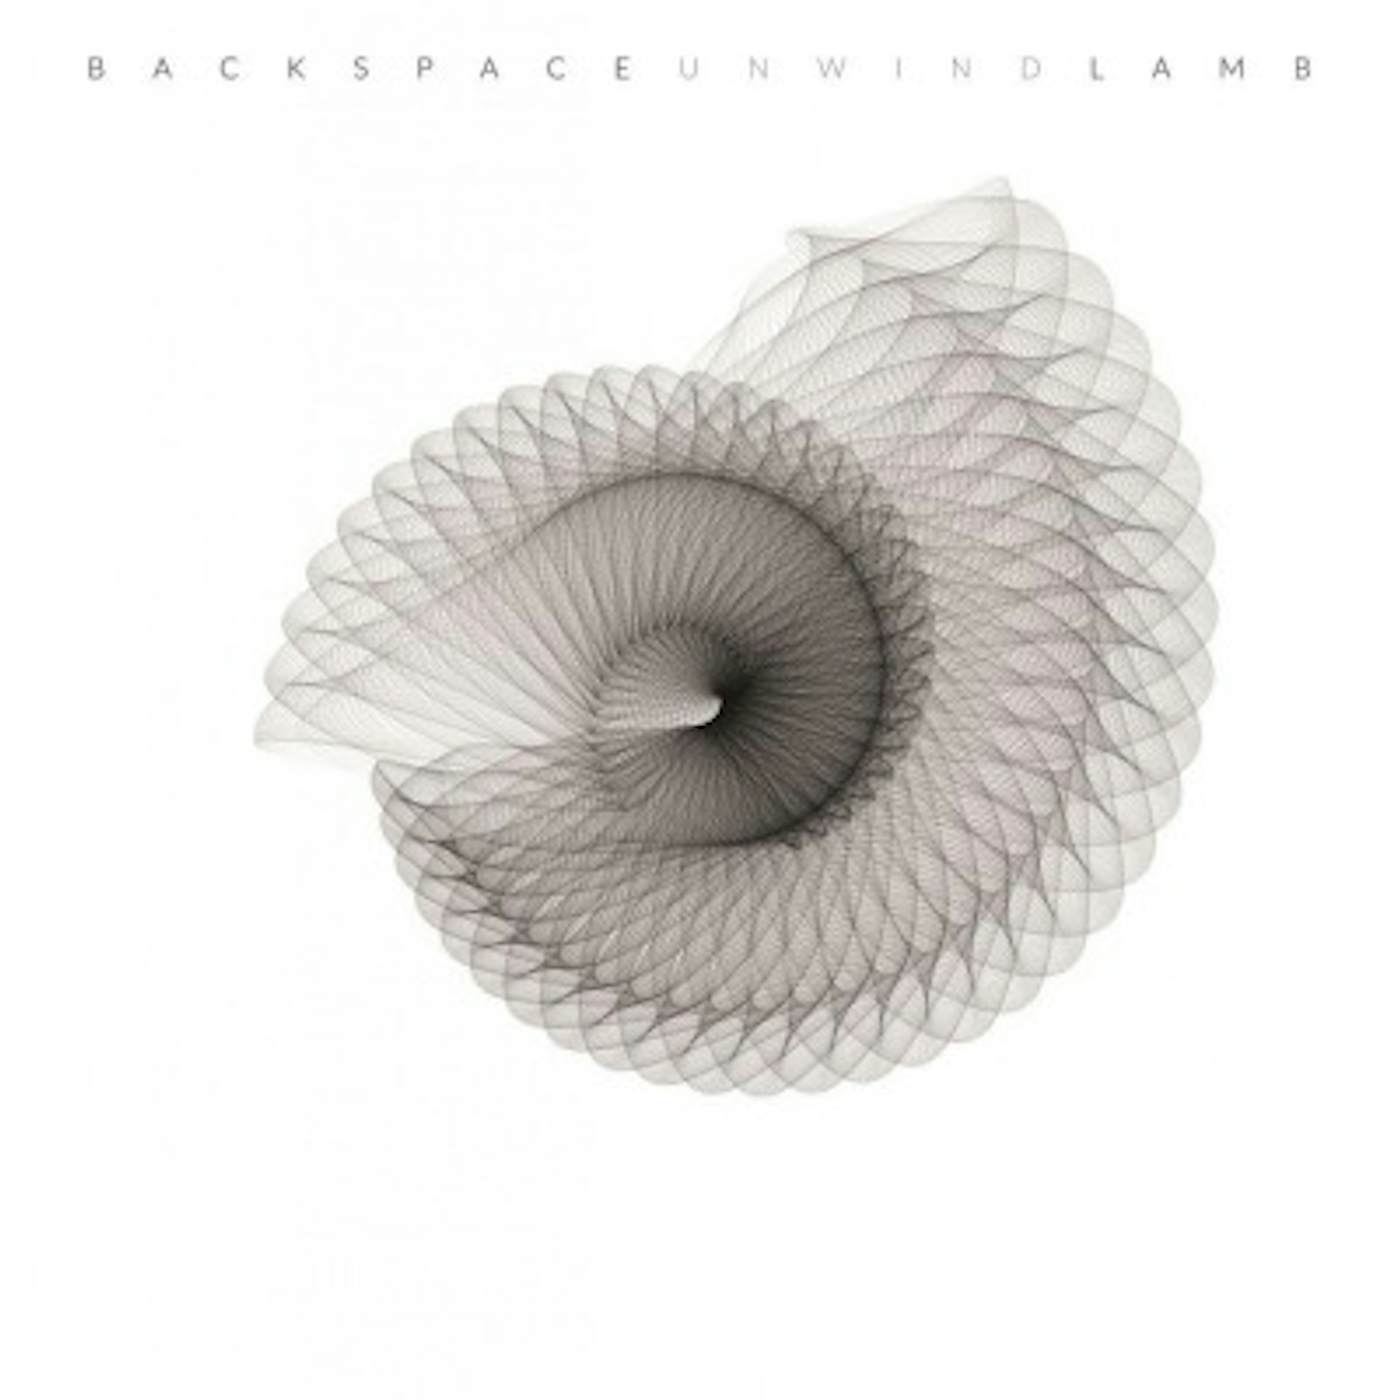 Lamb Backspace Unwind Vinyl Record